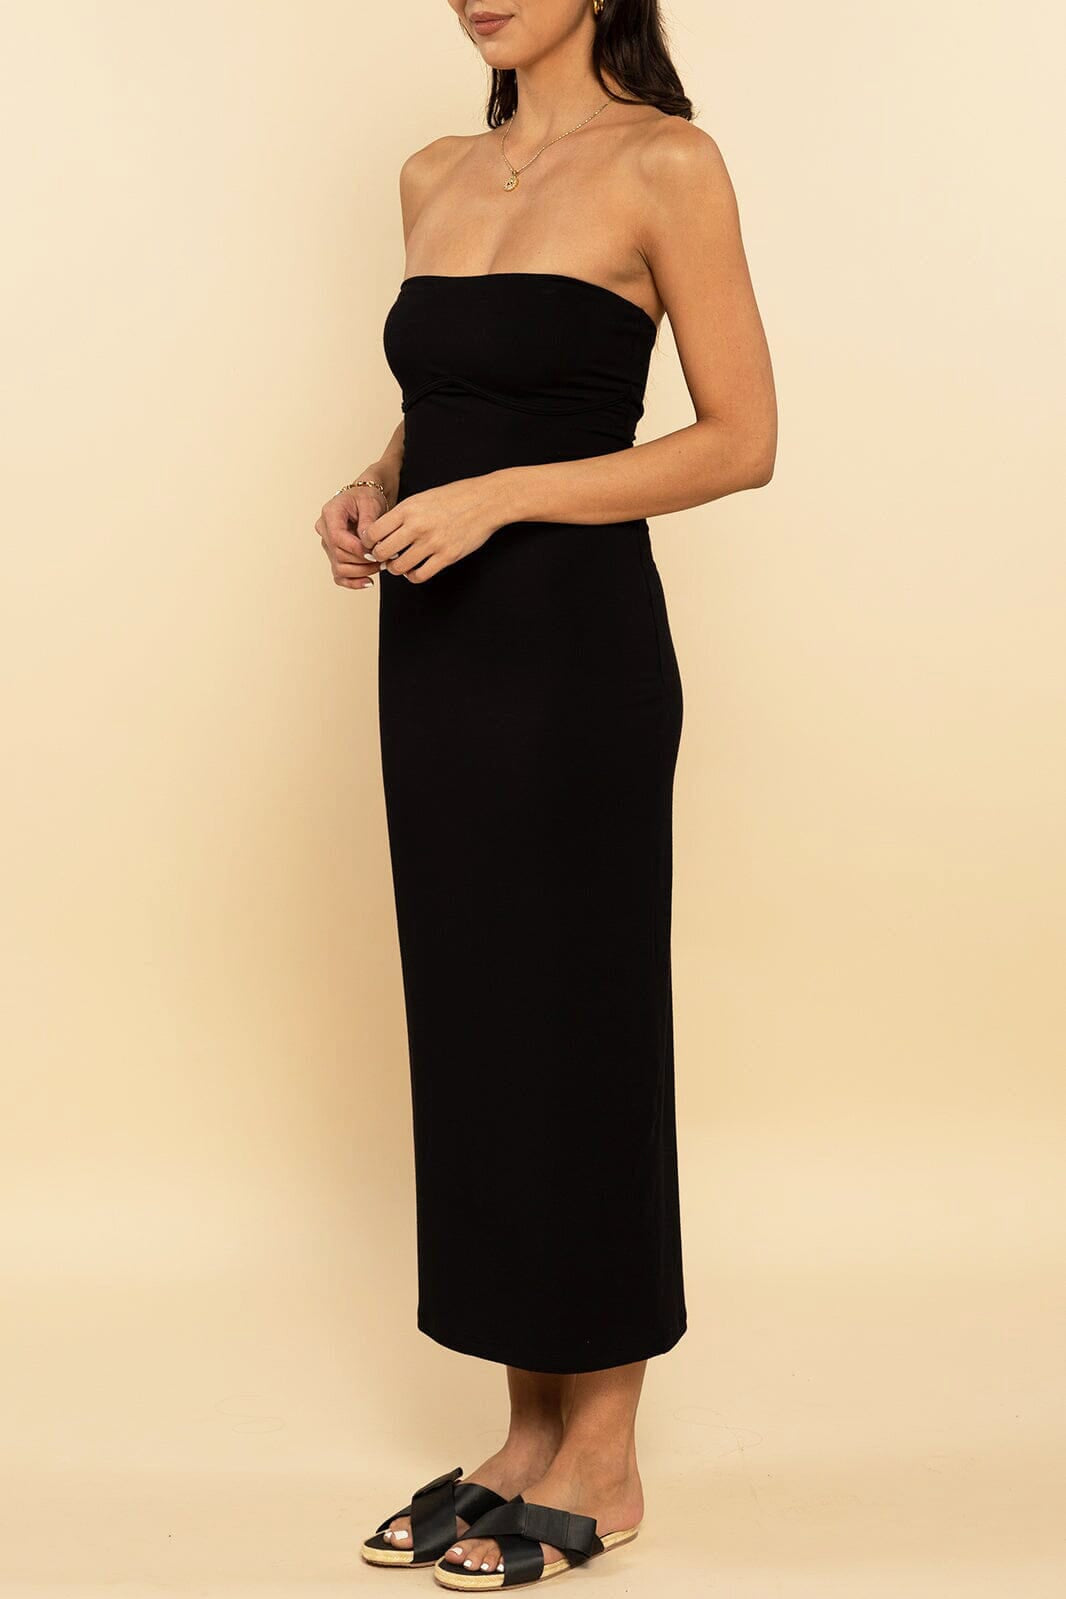 Black Strapless Tube Dress - Front Side Angle